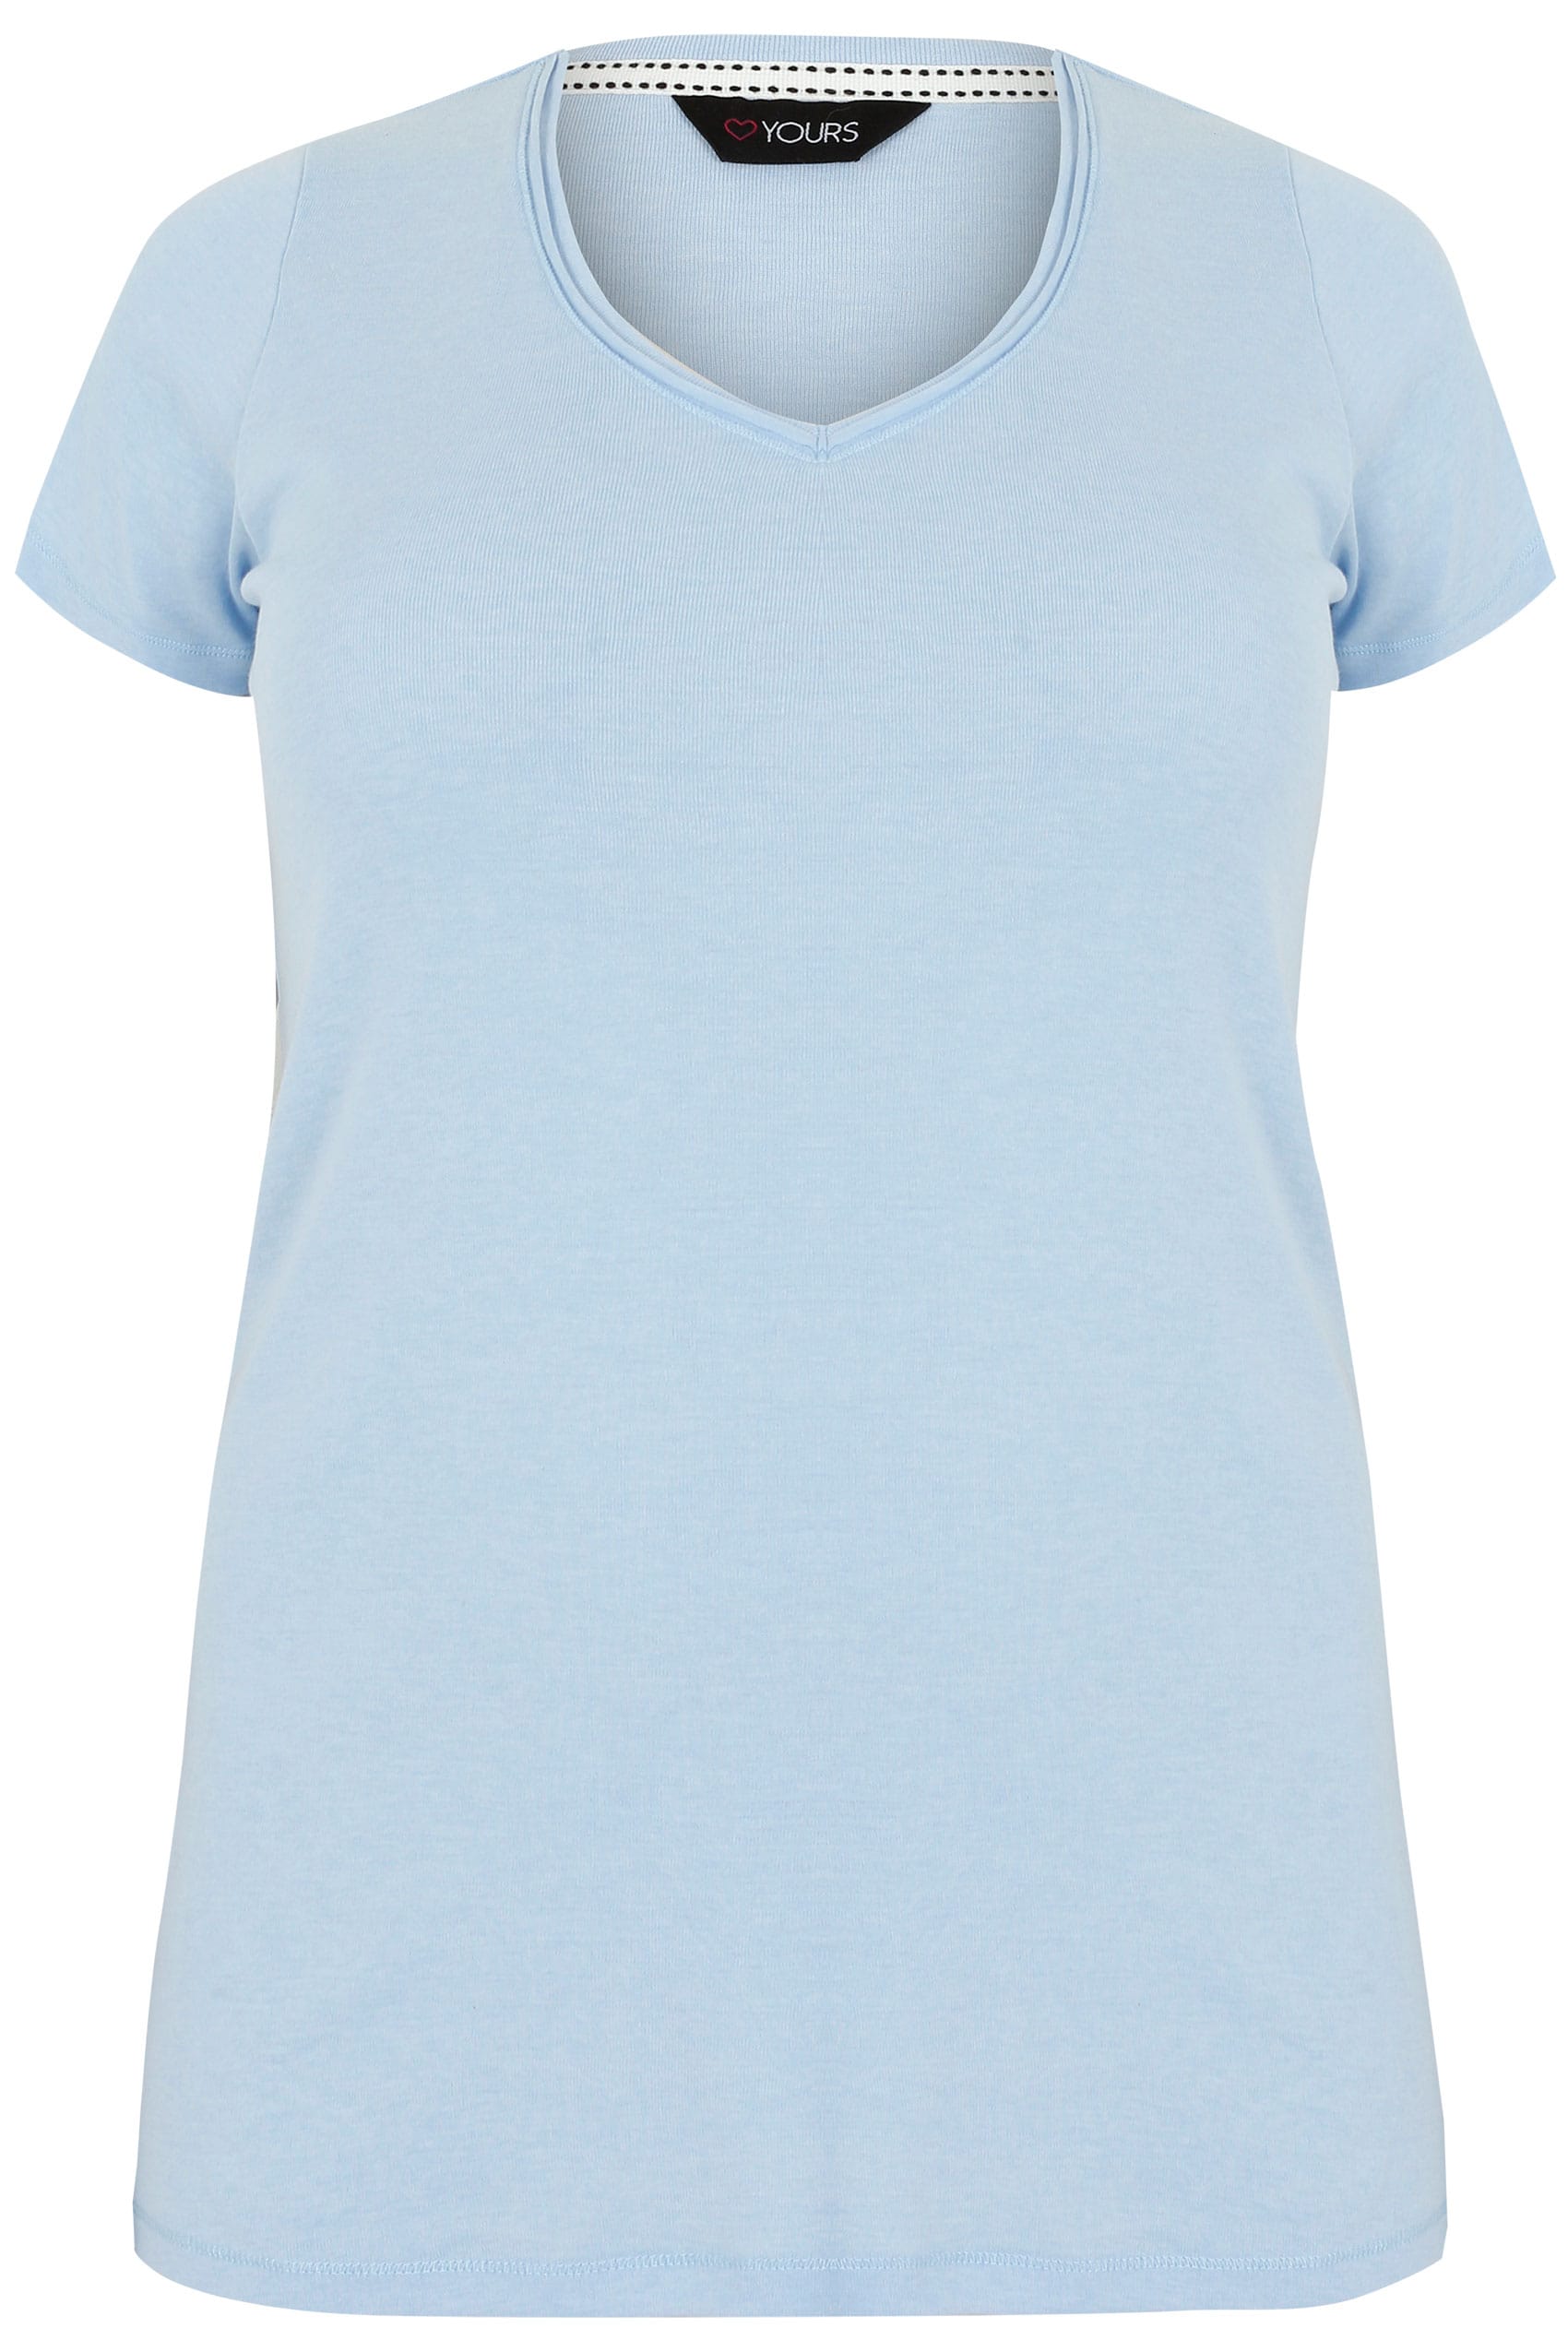 Light Blue Short Sleeved V-Neck Basic T-Shirt, Plus size 16 to 36